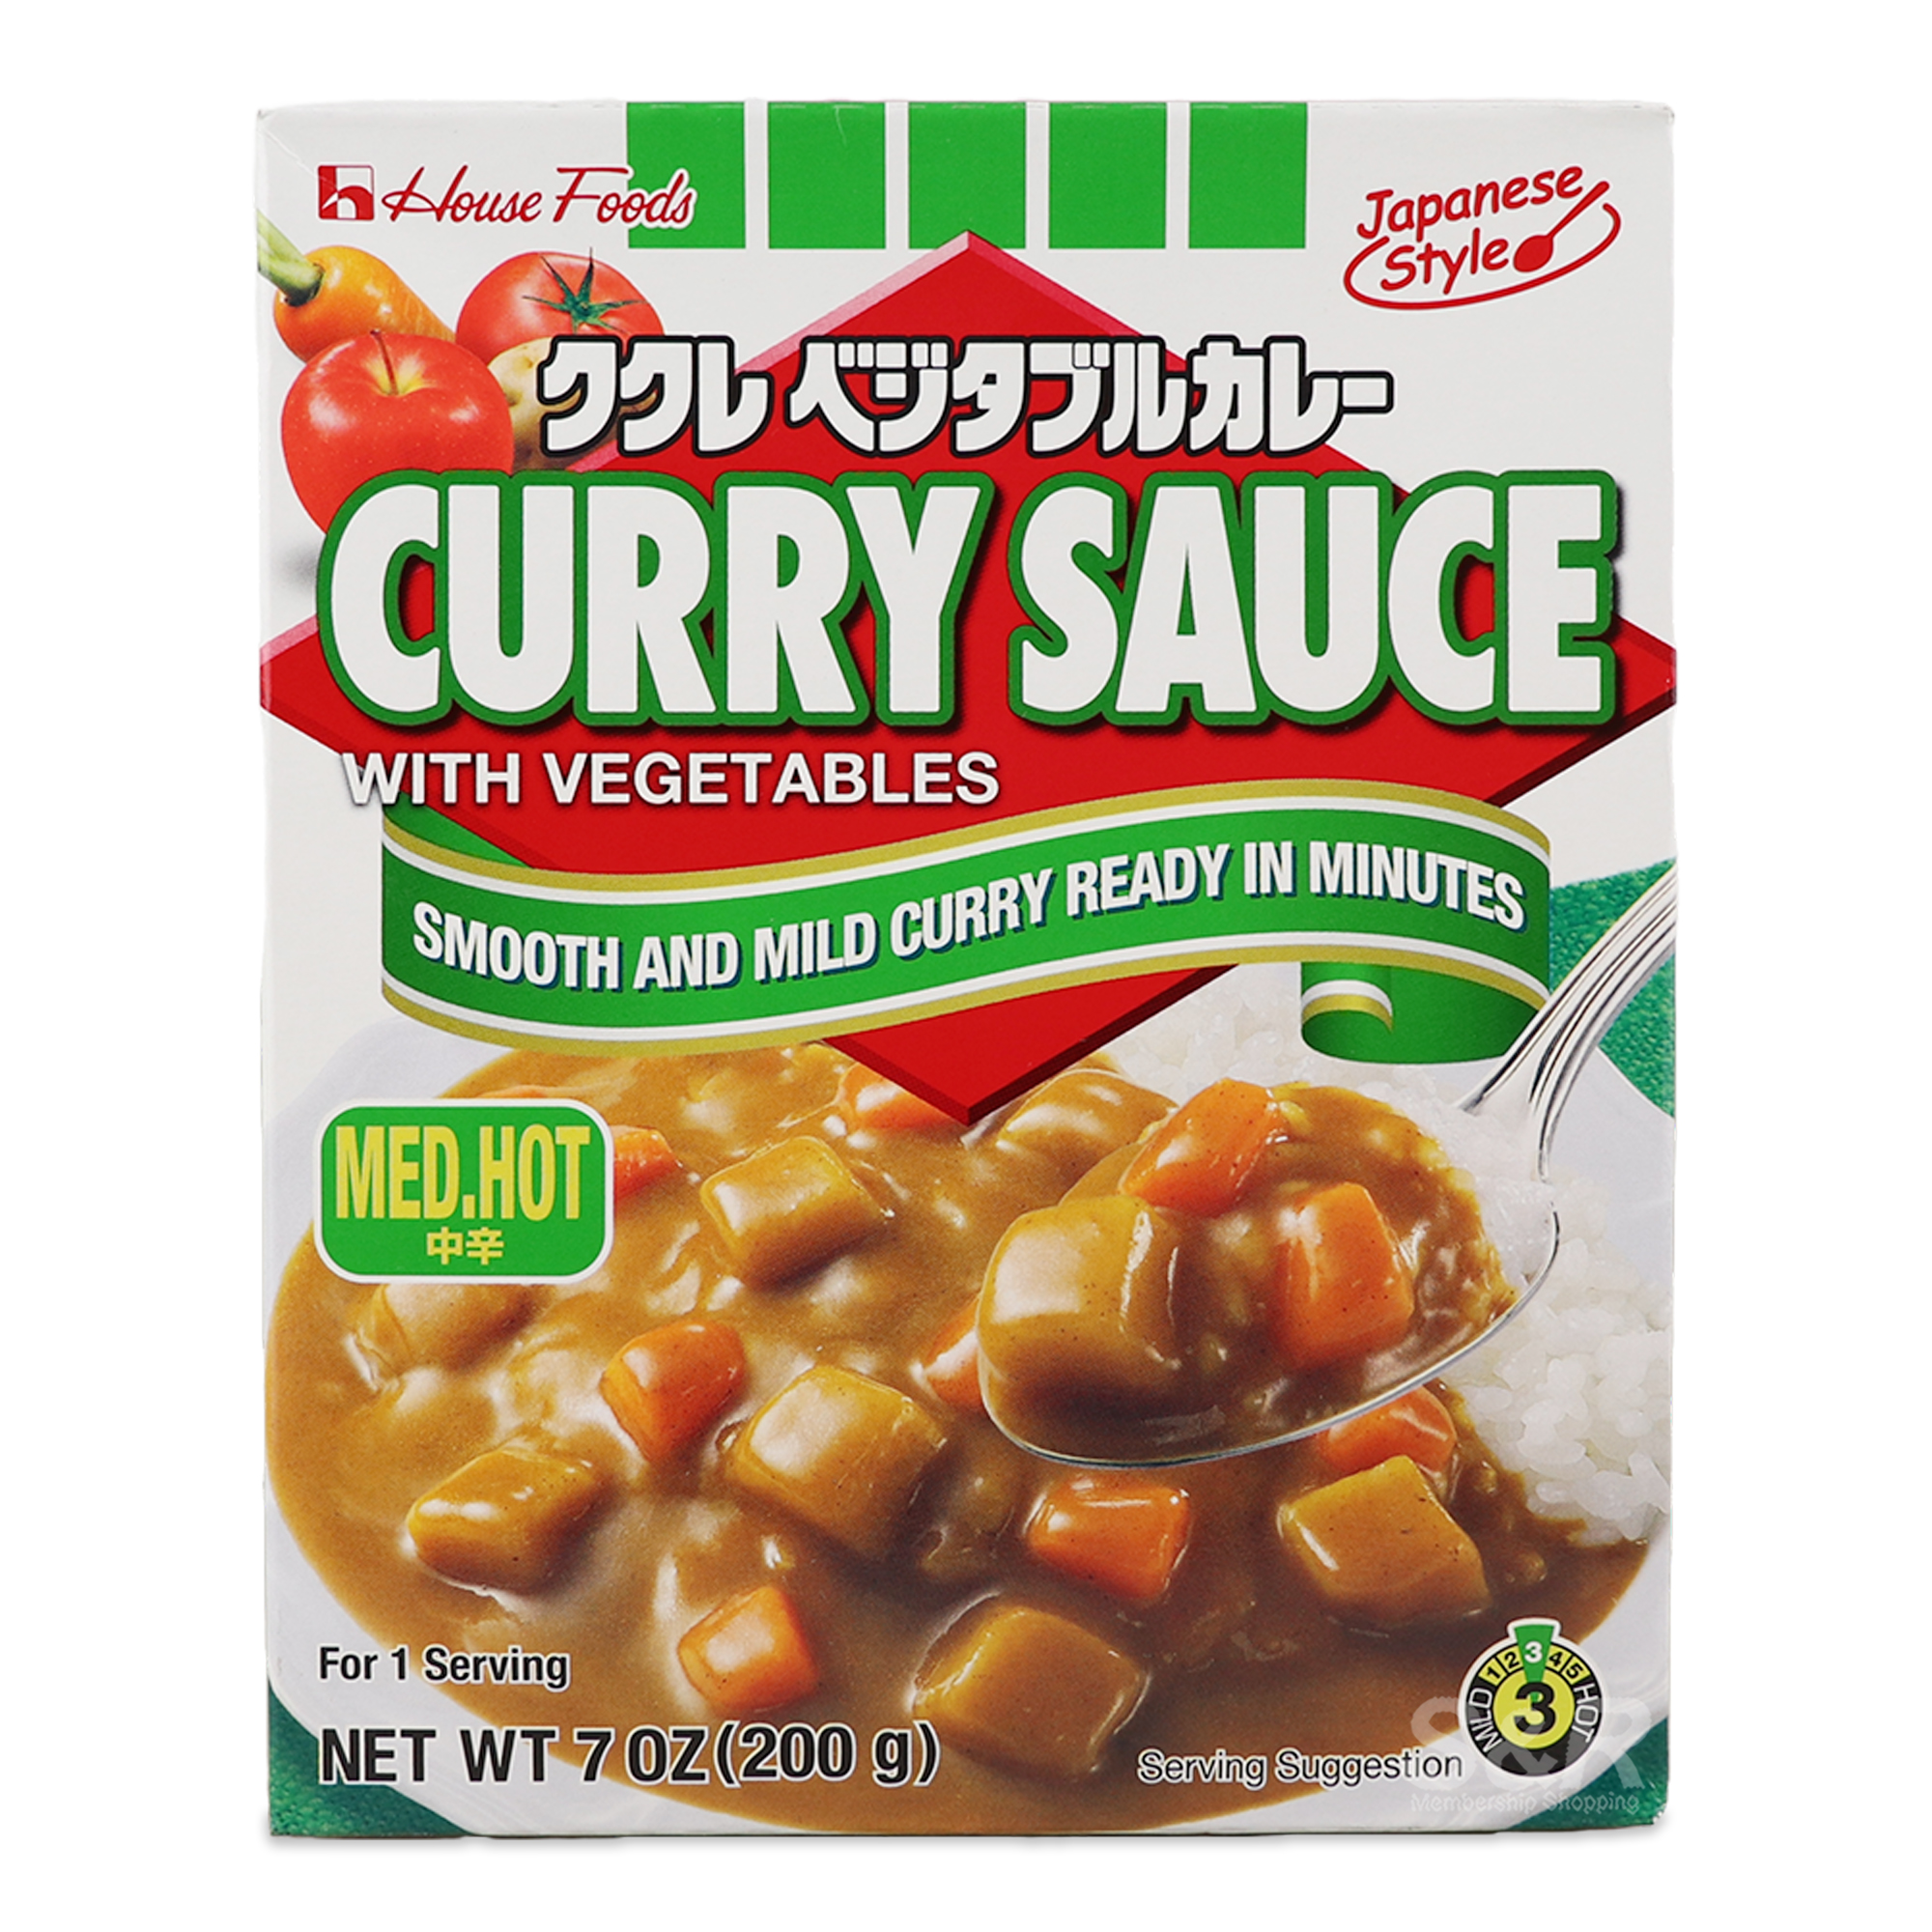 House Foods Japanese Style Curry Sauce Medium Hot 200g